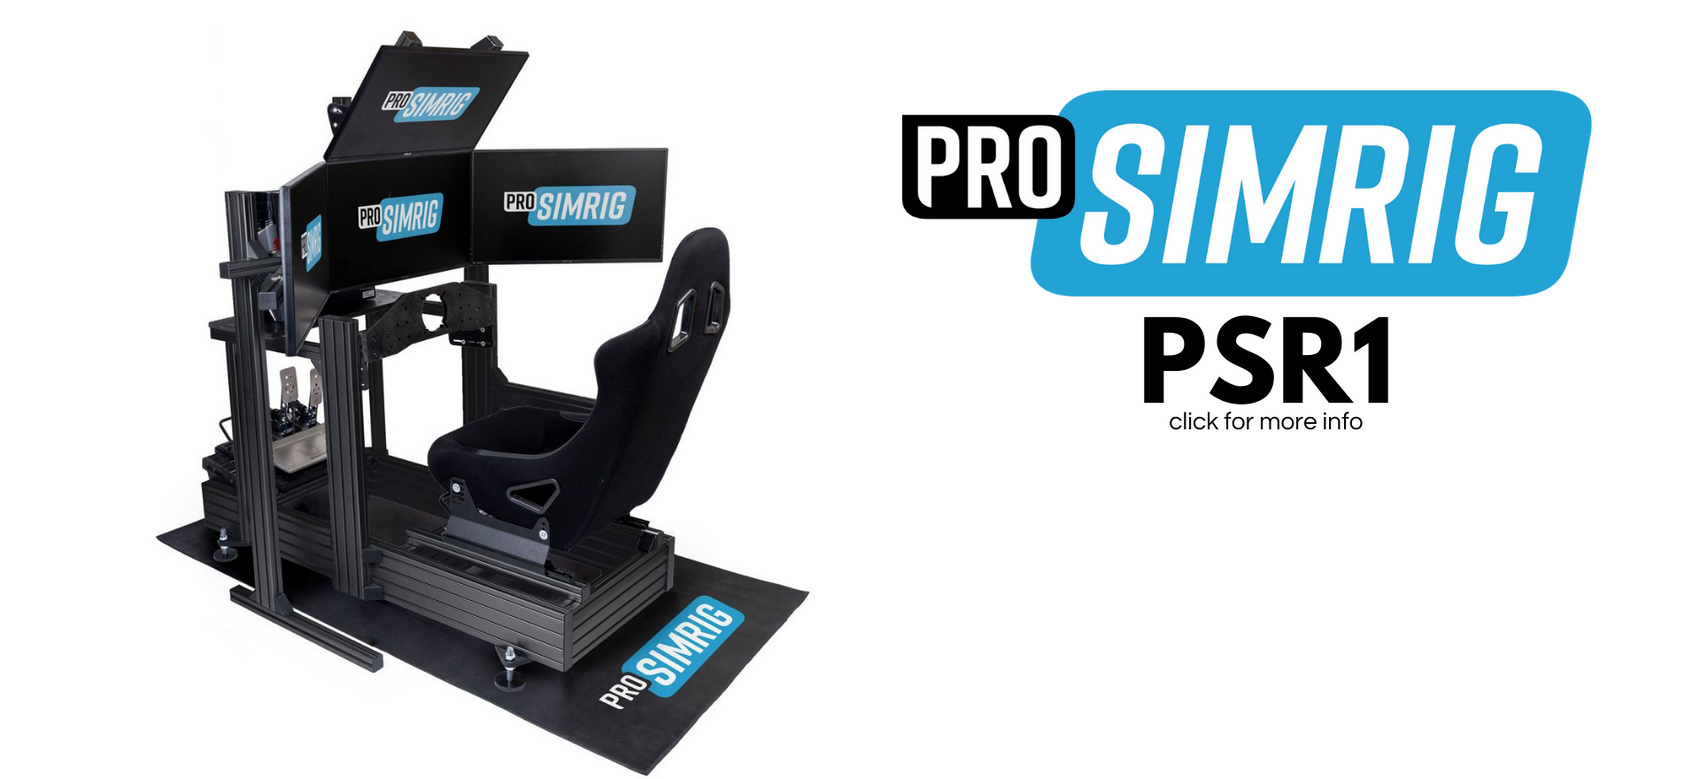 PRO SIMRIG – The ultimate high quality sim racing cockpit – Pro